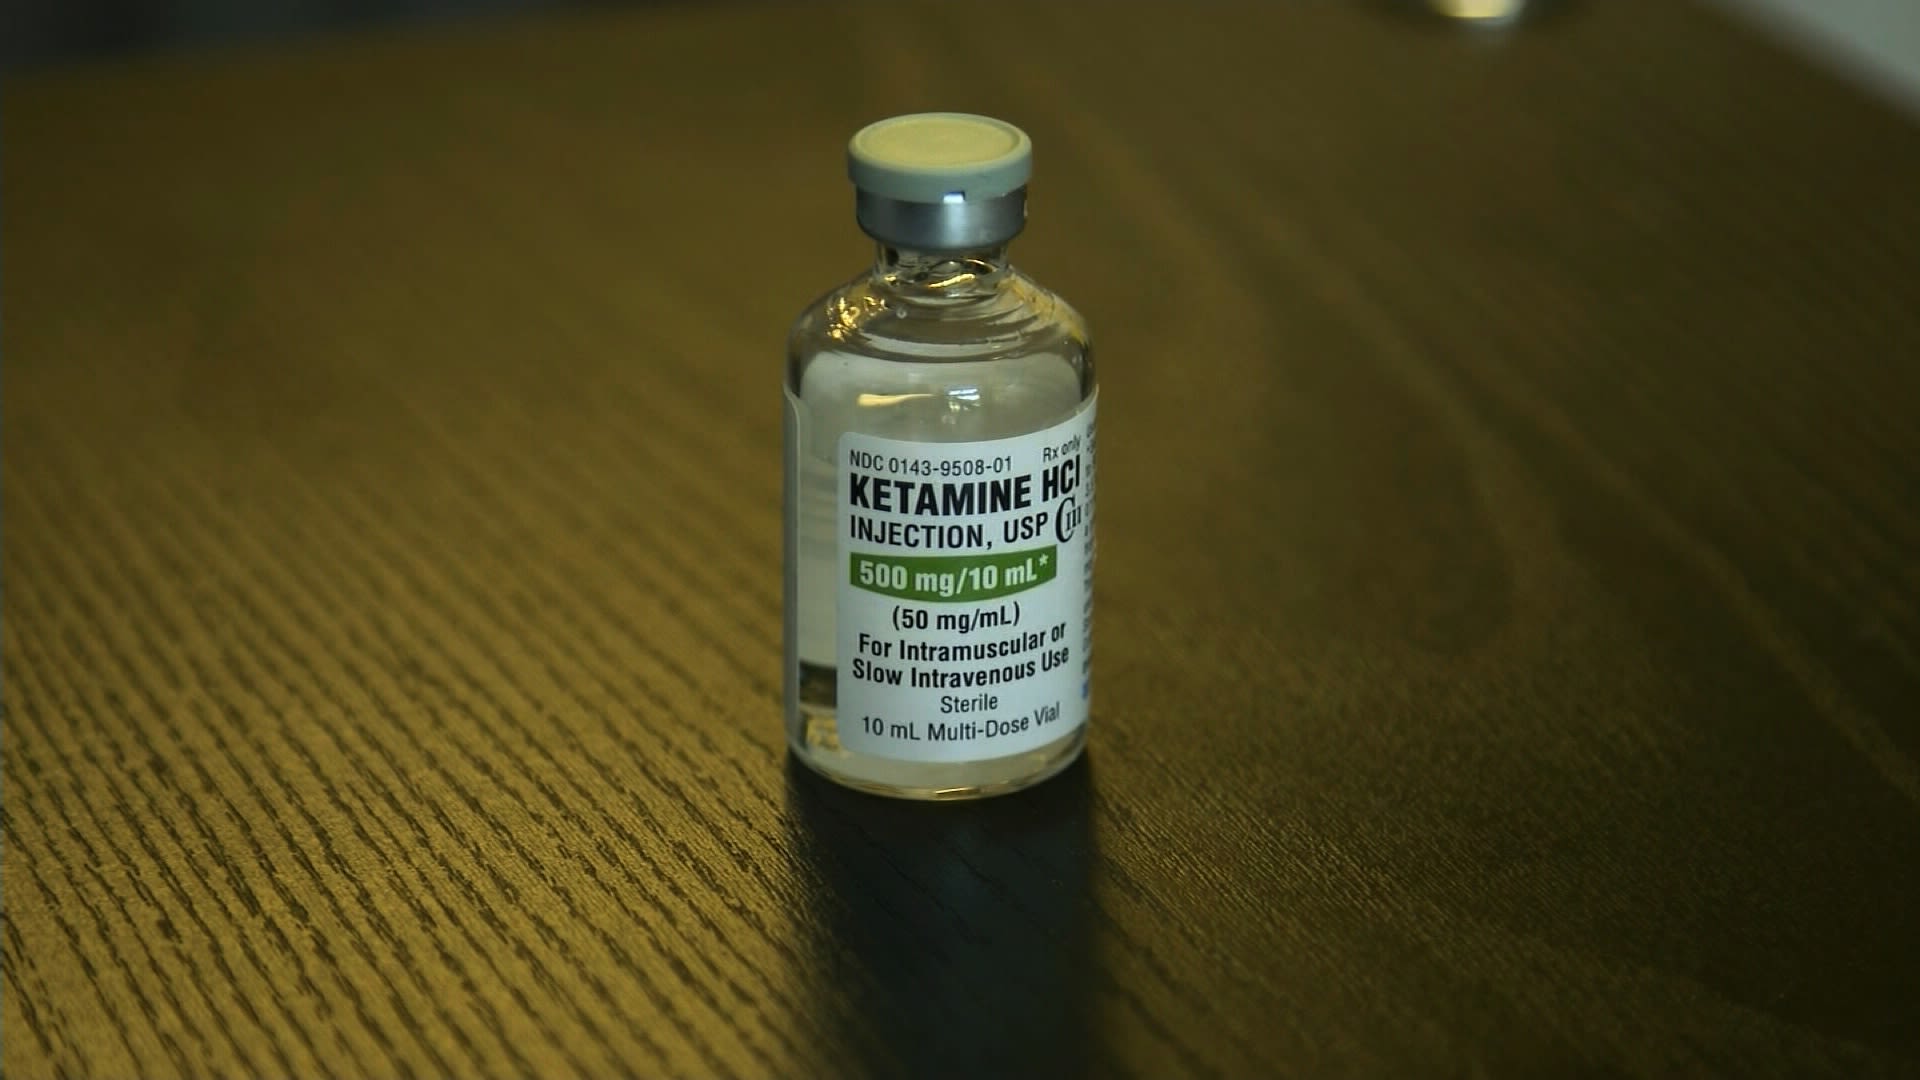 How To Store Ketamine